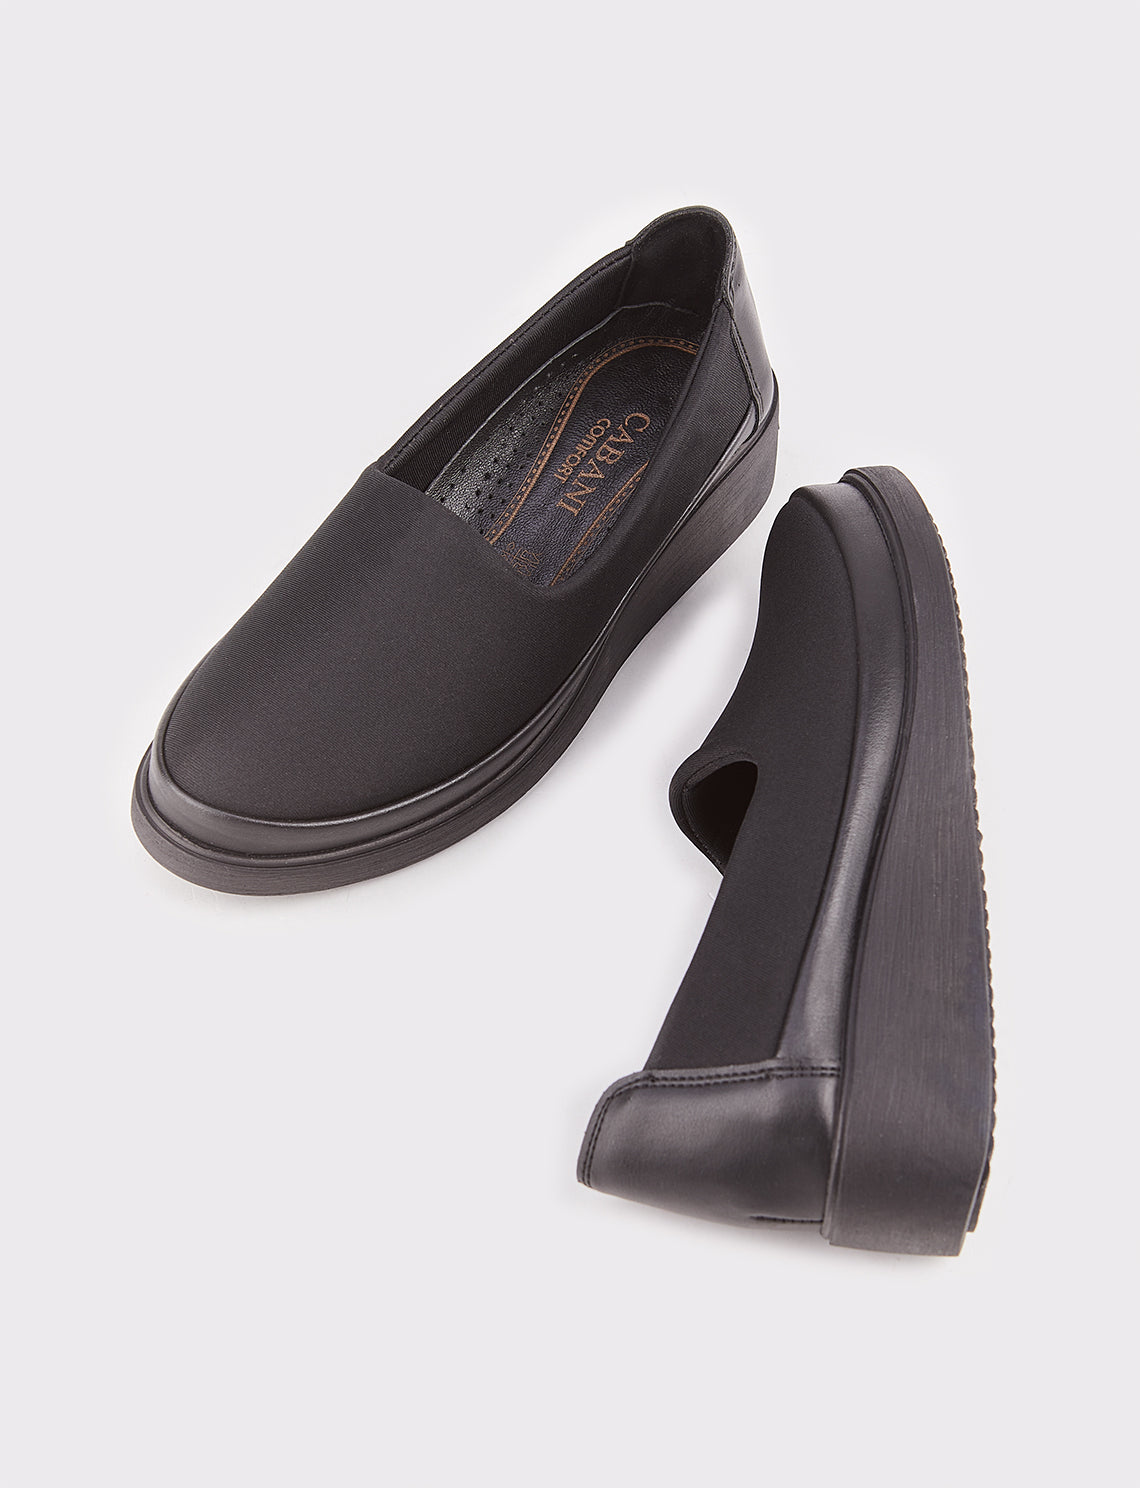 Women Black Slip On Casual Shoes